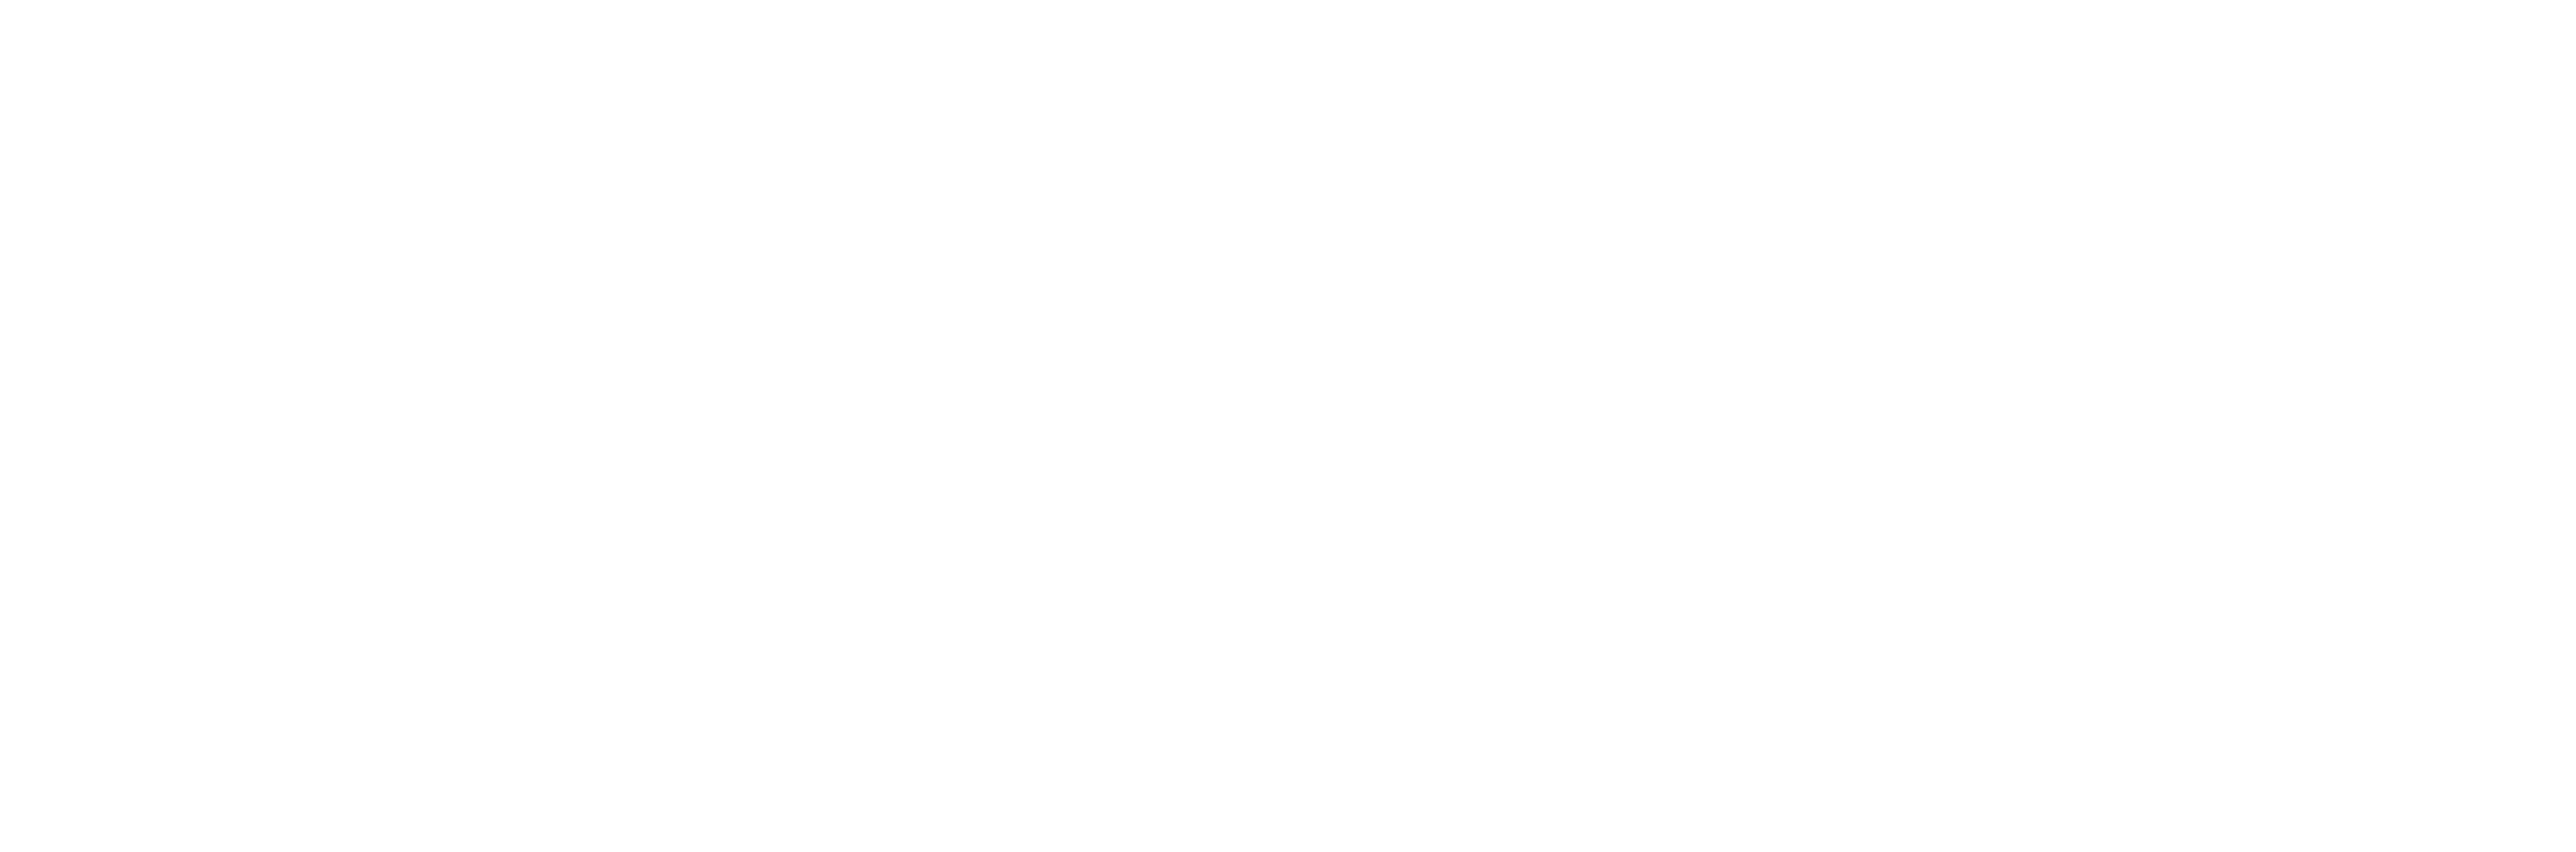 Junior Achievement of South Florida